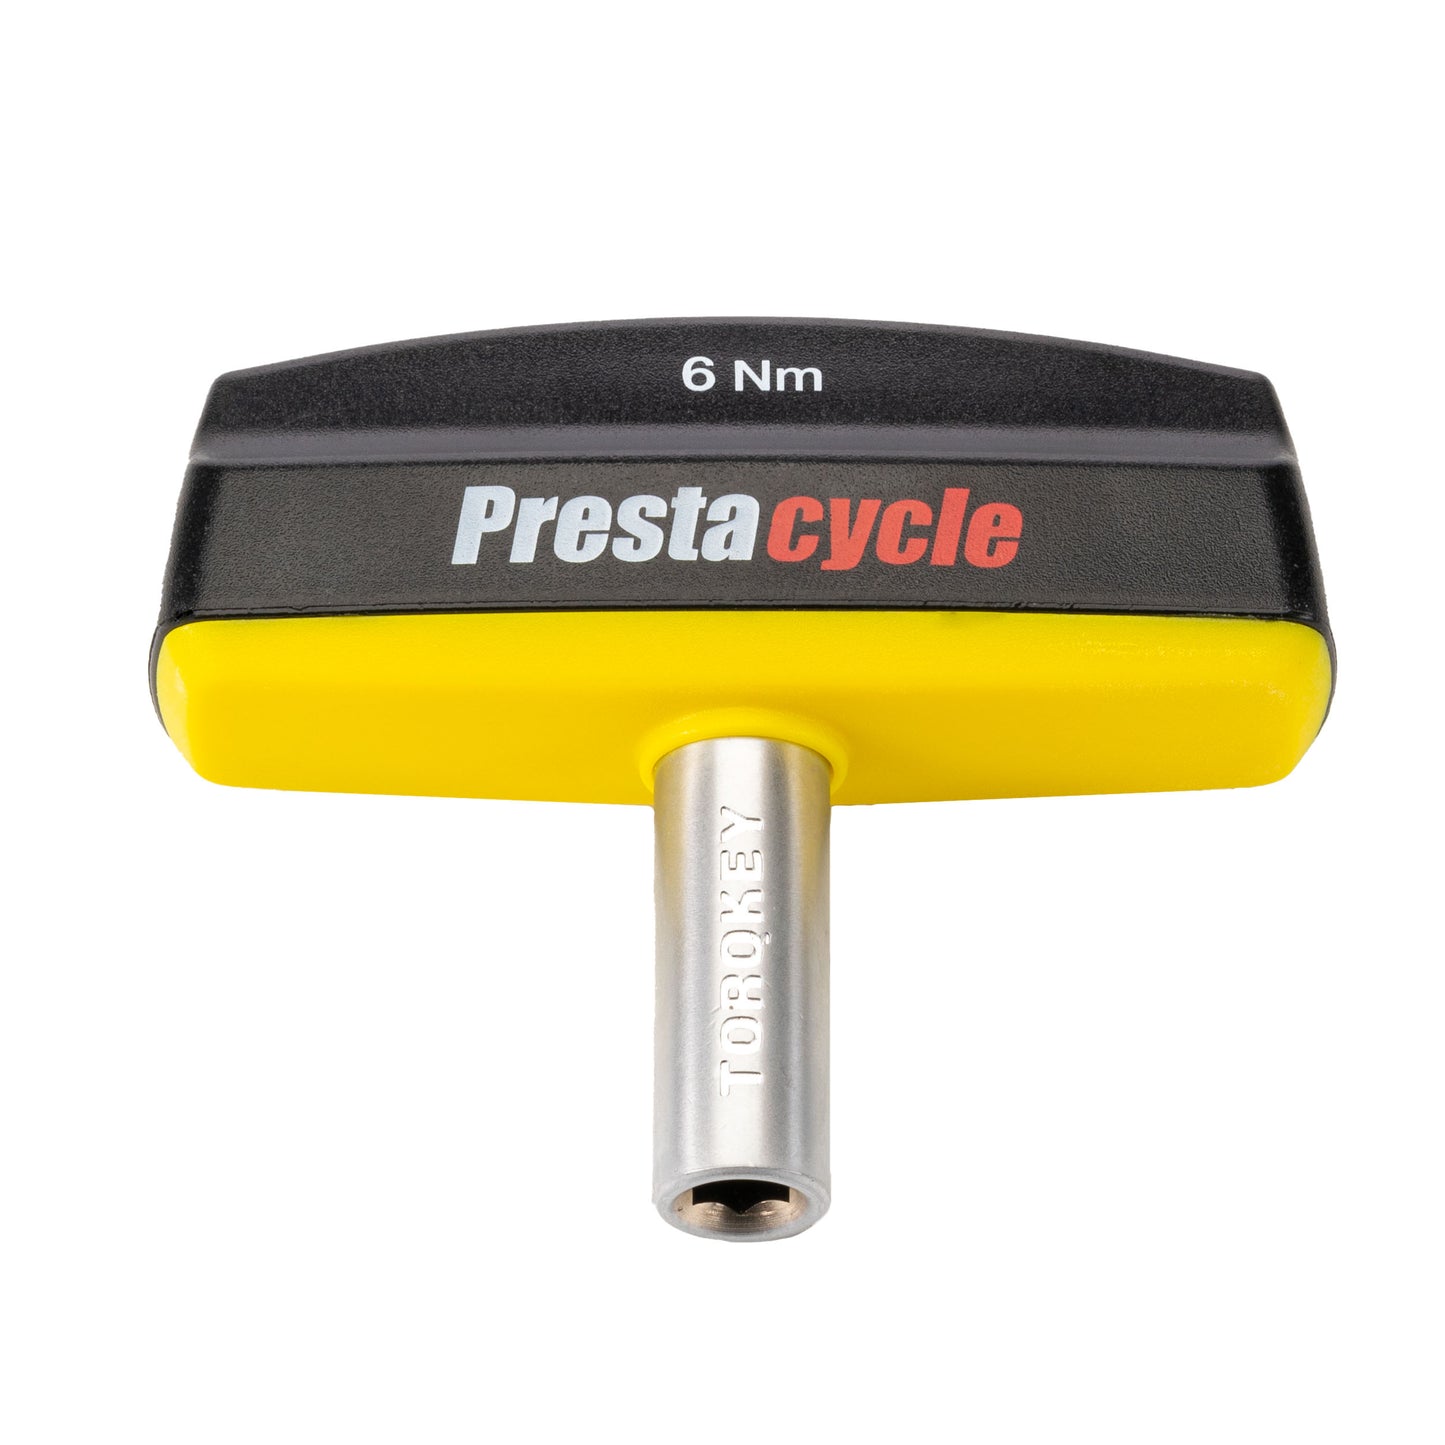 Prestacycle Pro TorqKeys - 6Nm T-Handle Torque-Limiting Bits Tool